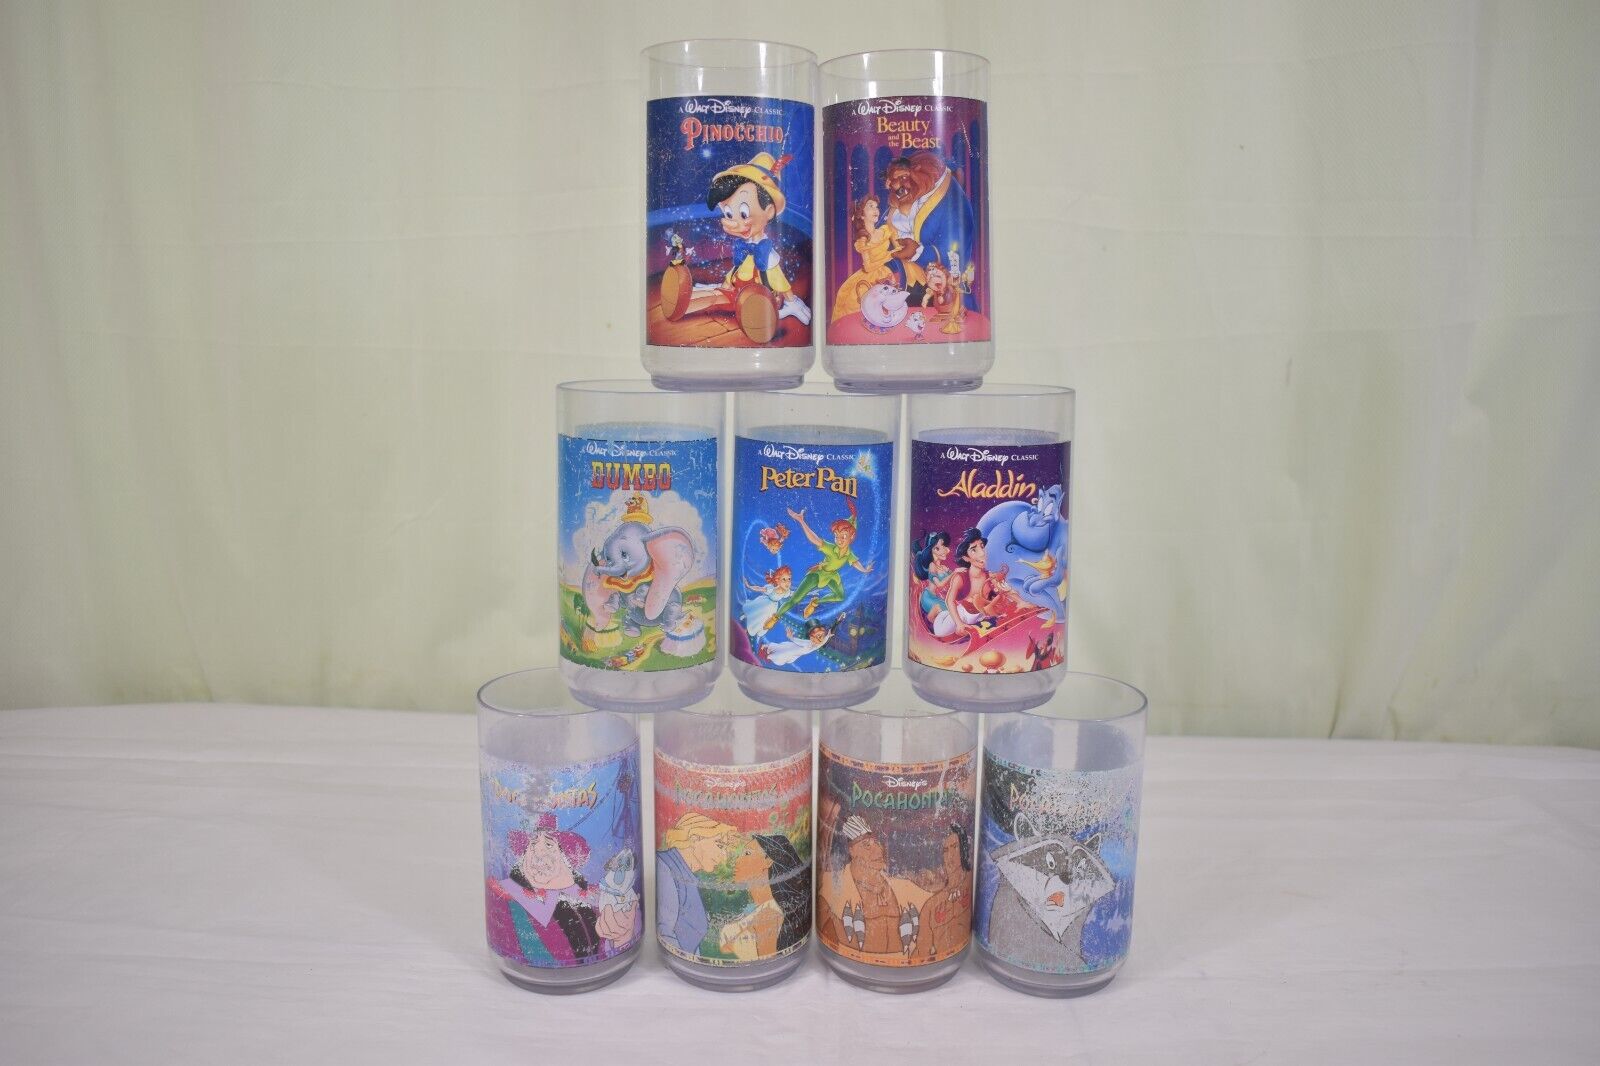 5 Walt Disney Classic + 4 Pocahontas Burger King Cups Lot Vintage Dumbo/Aladdin